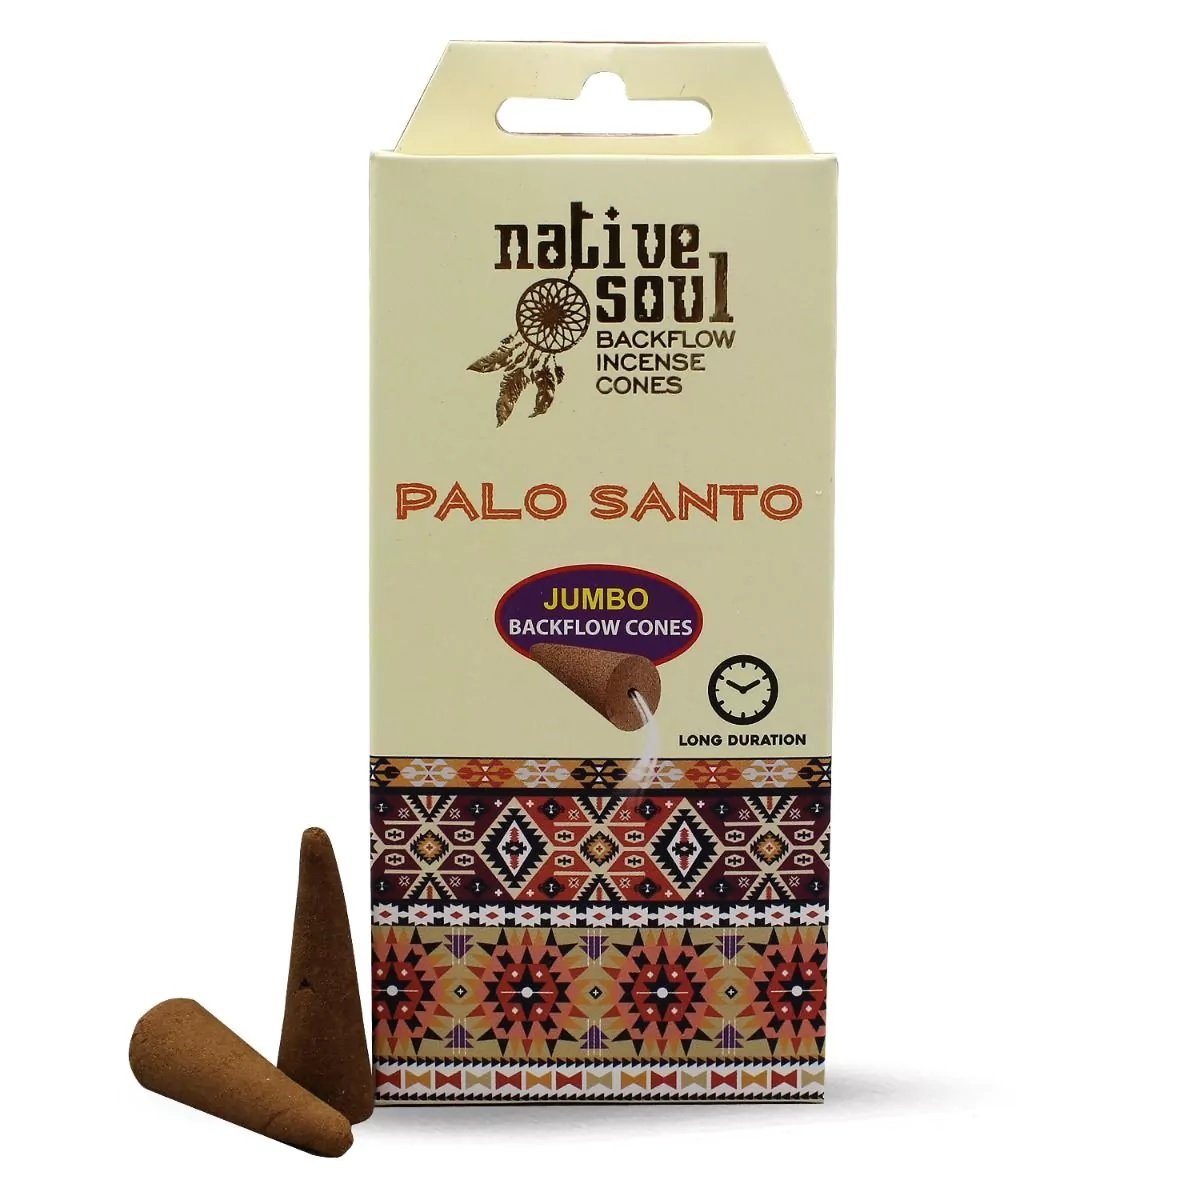 Native Soul Palo Santo Backflow Cones (Jumbo)